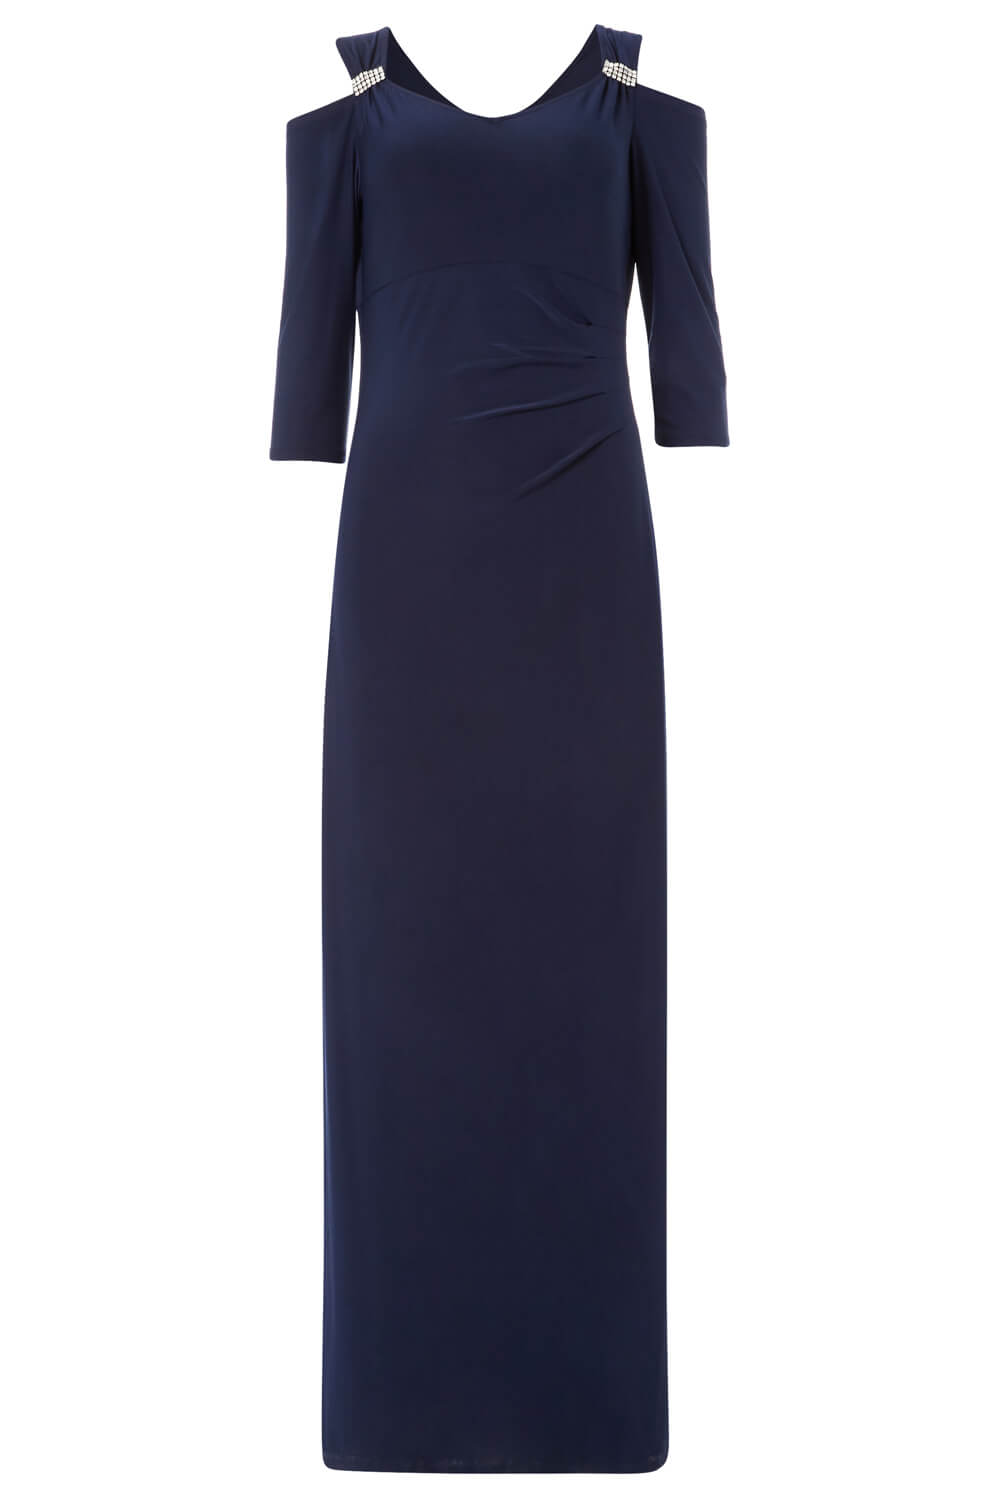 Midnight Blue Cold Shoulder Diamante Maxi Dress, Image 3 of 3